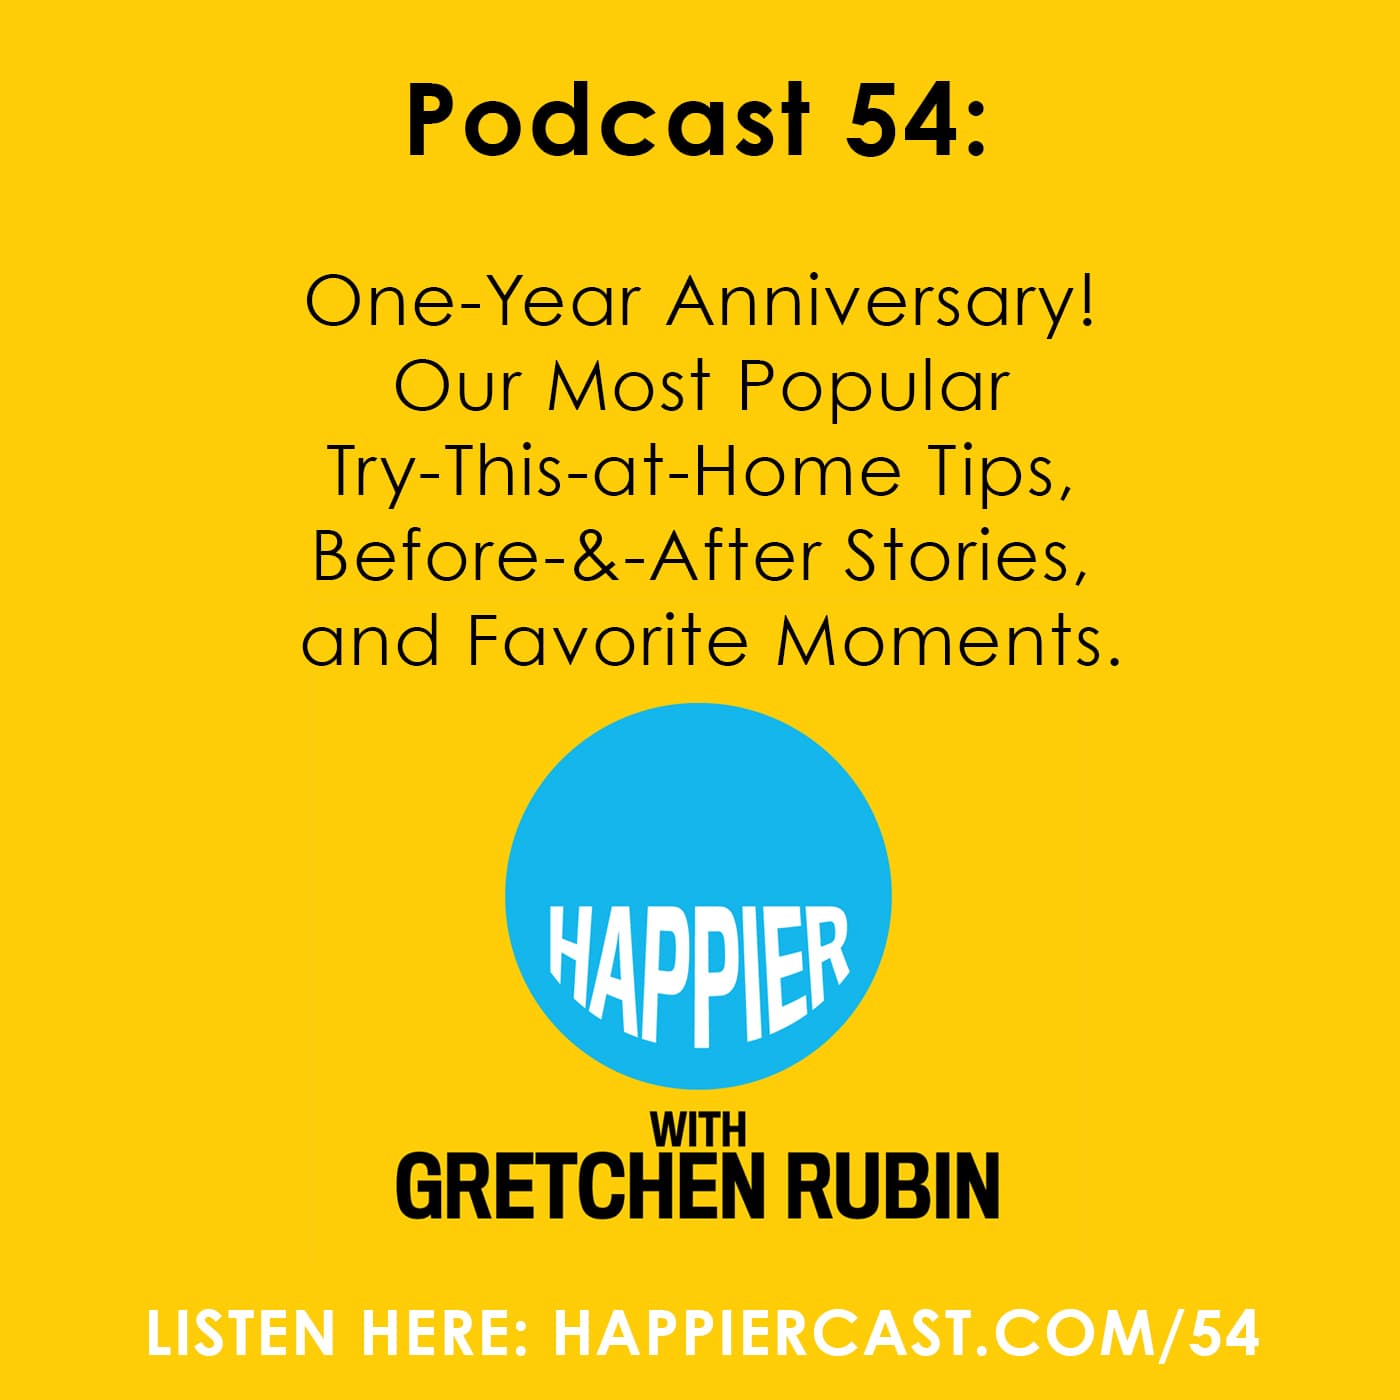 Happier with Gretchen Rubin - Anniversary Podcast